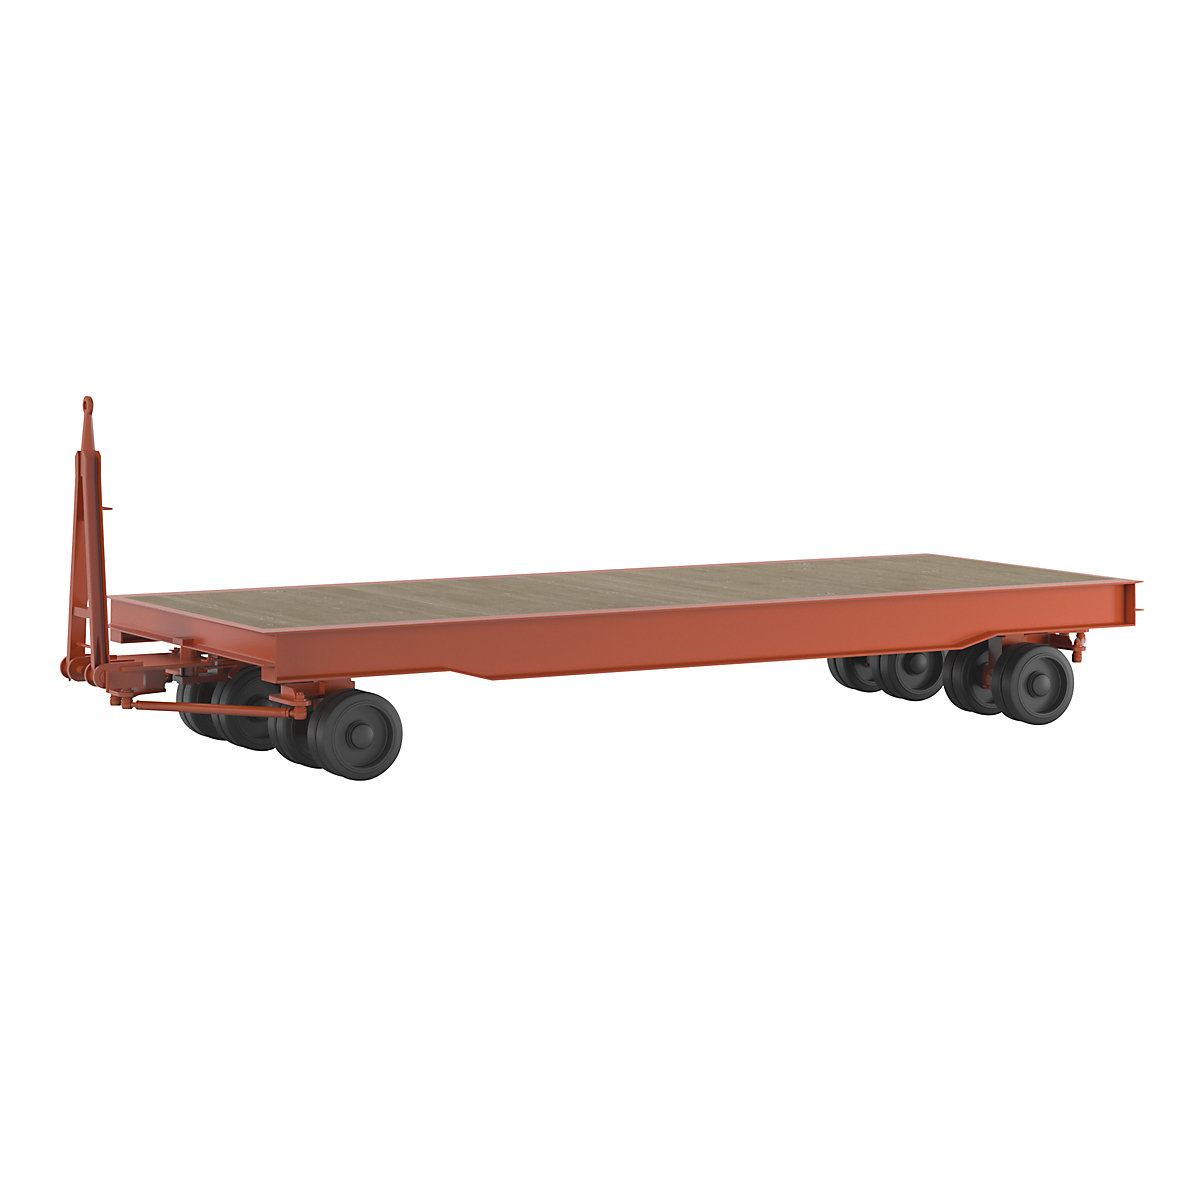 Heavy goods trailer, 20 t, 4-wheel linked Ackermann steering, platform 5.0 x 2.0 m-1